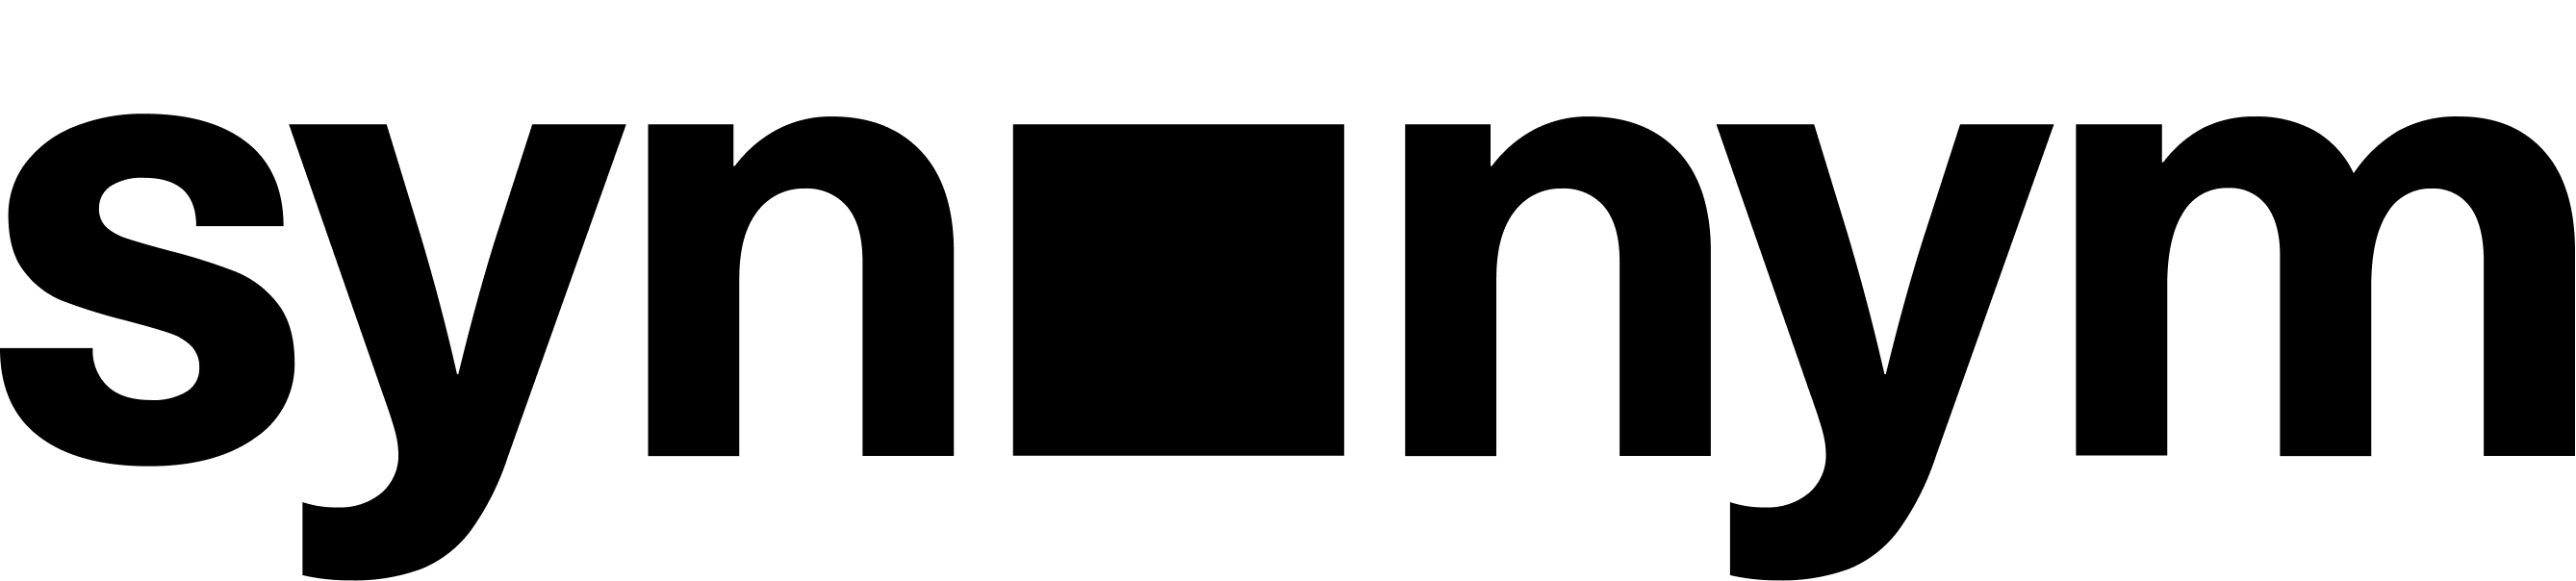 Synonym-Logo-Black